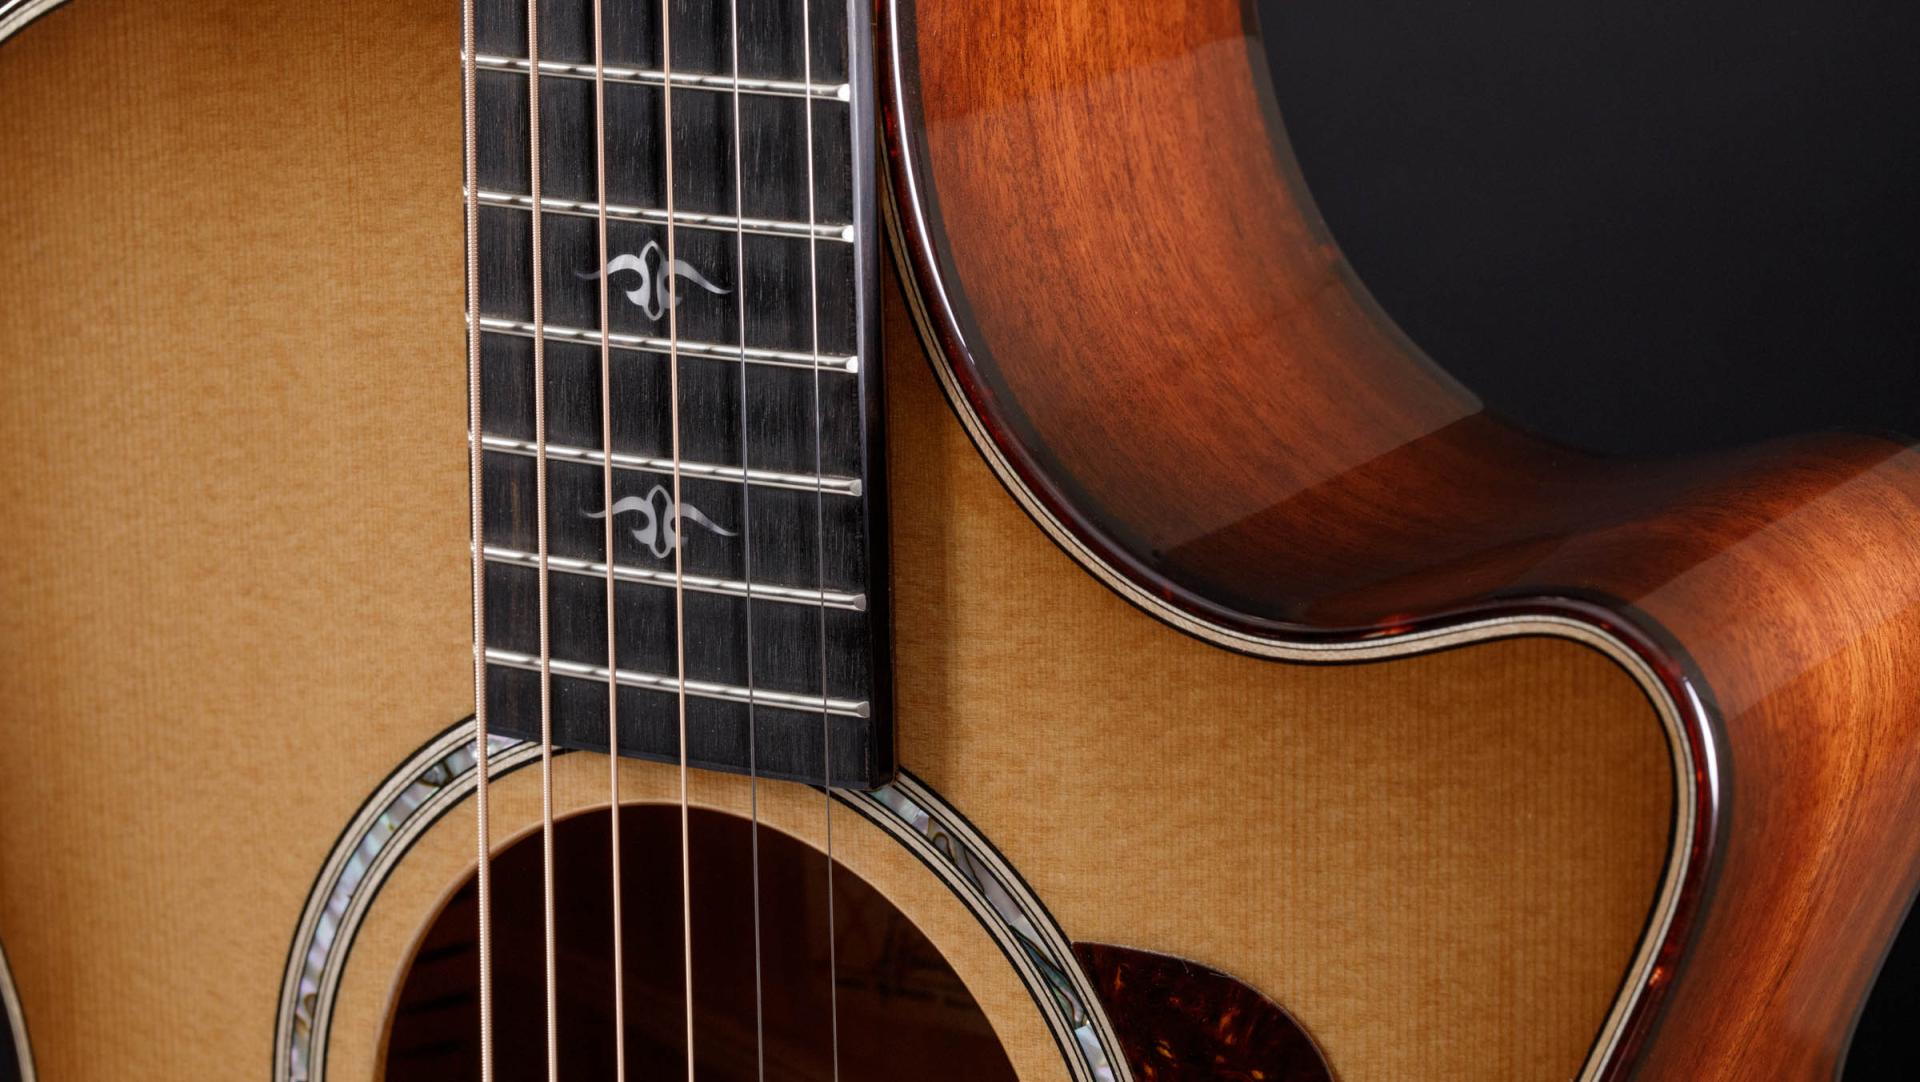 512ce 12-Fret Urban Ironbark Acoustic-Electric Guitar | Taylor Guitars